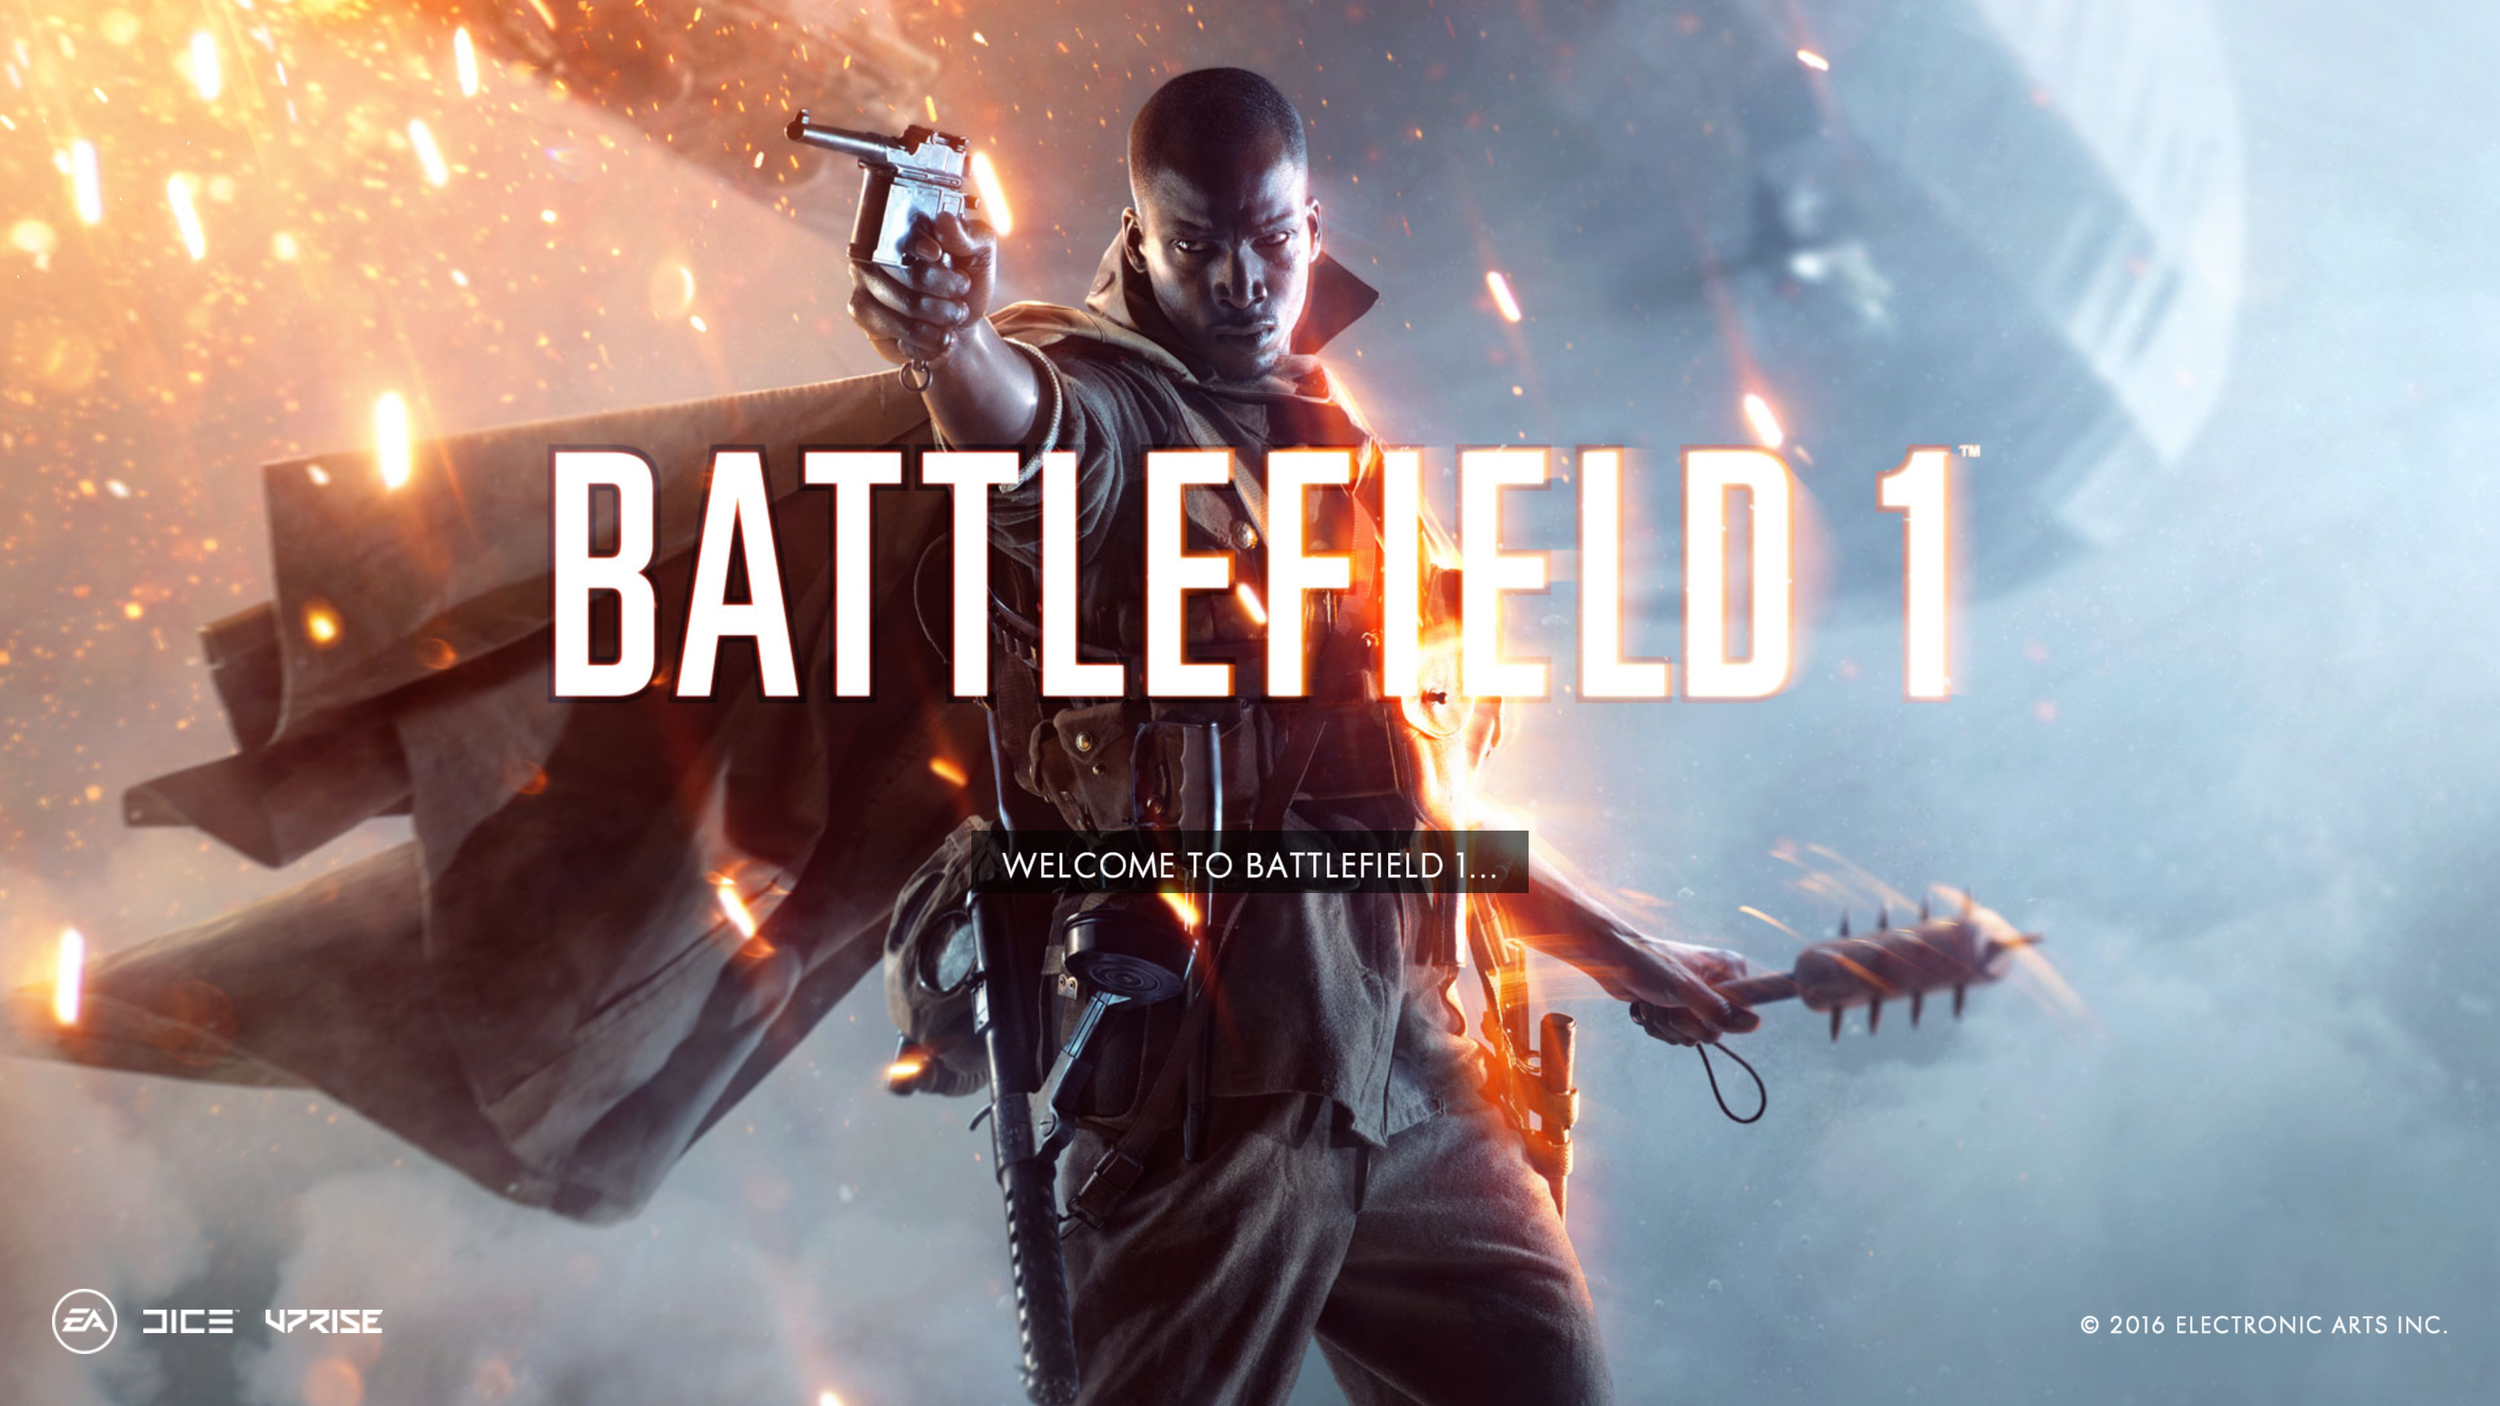 Battlefield 1 PC review